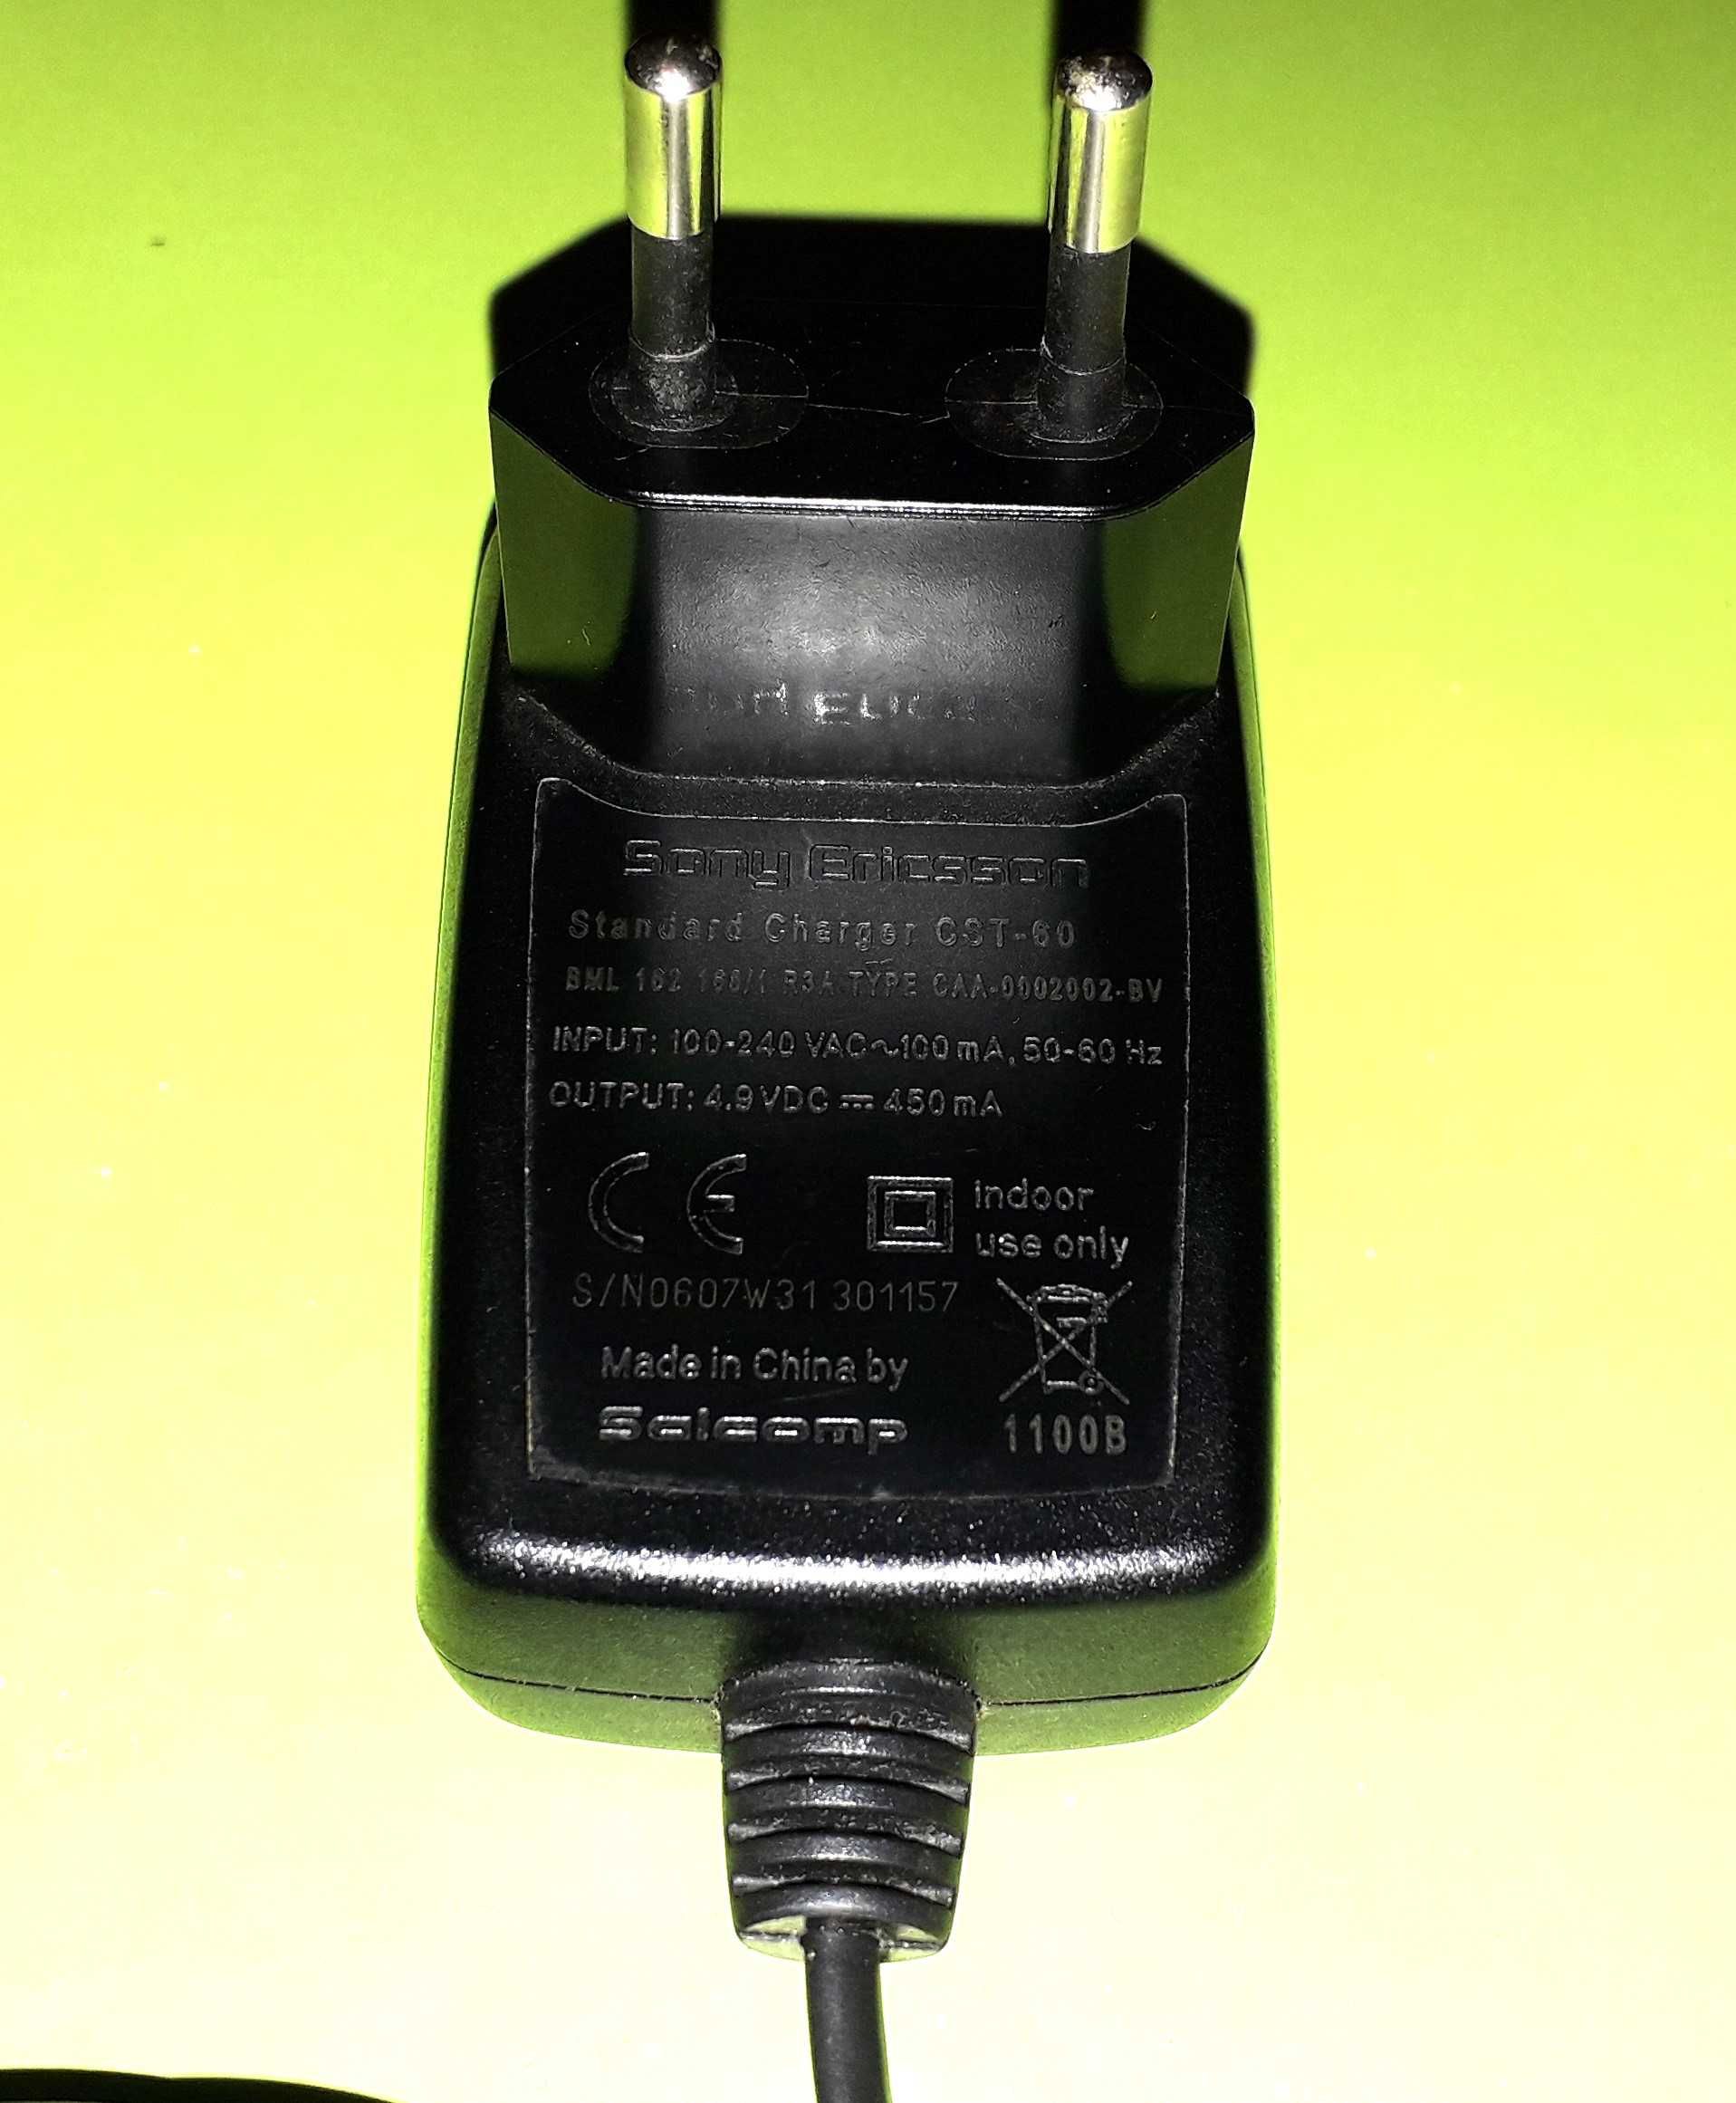 Сетевое зарядное устройство Sony Ericsson CST-60 оригинал